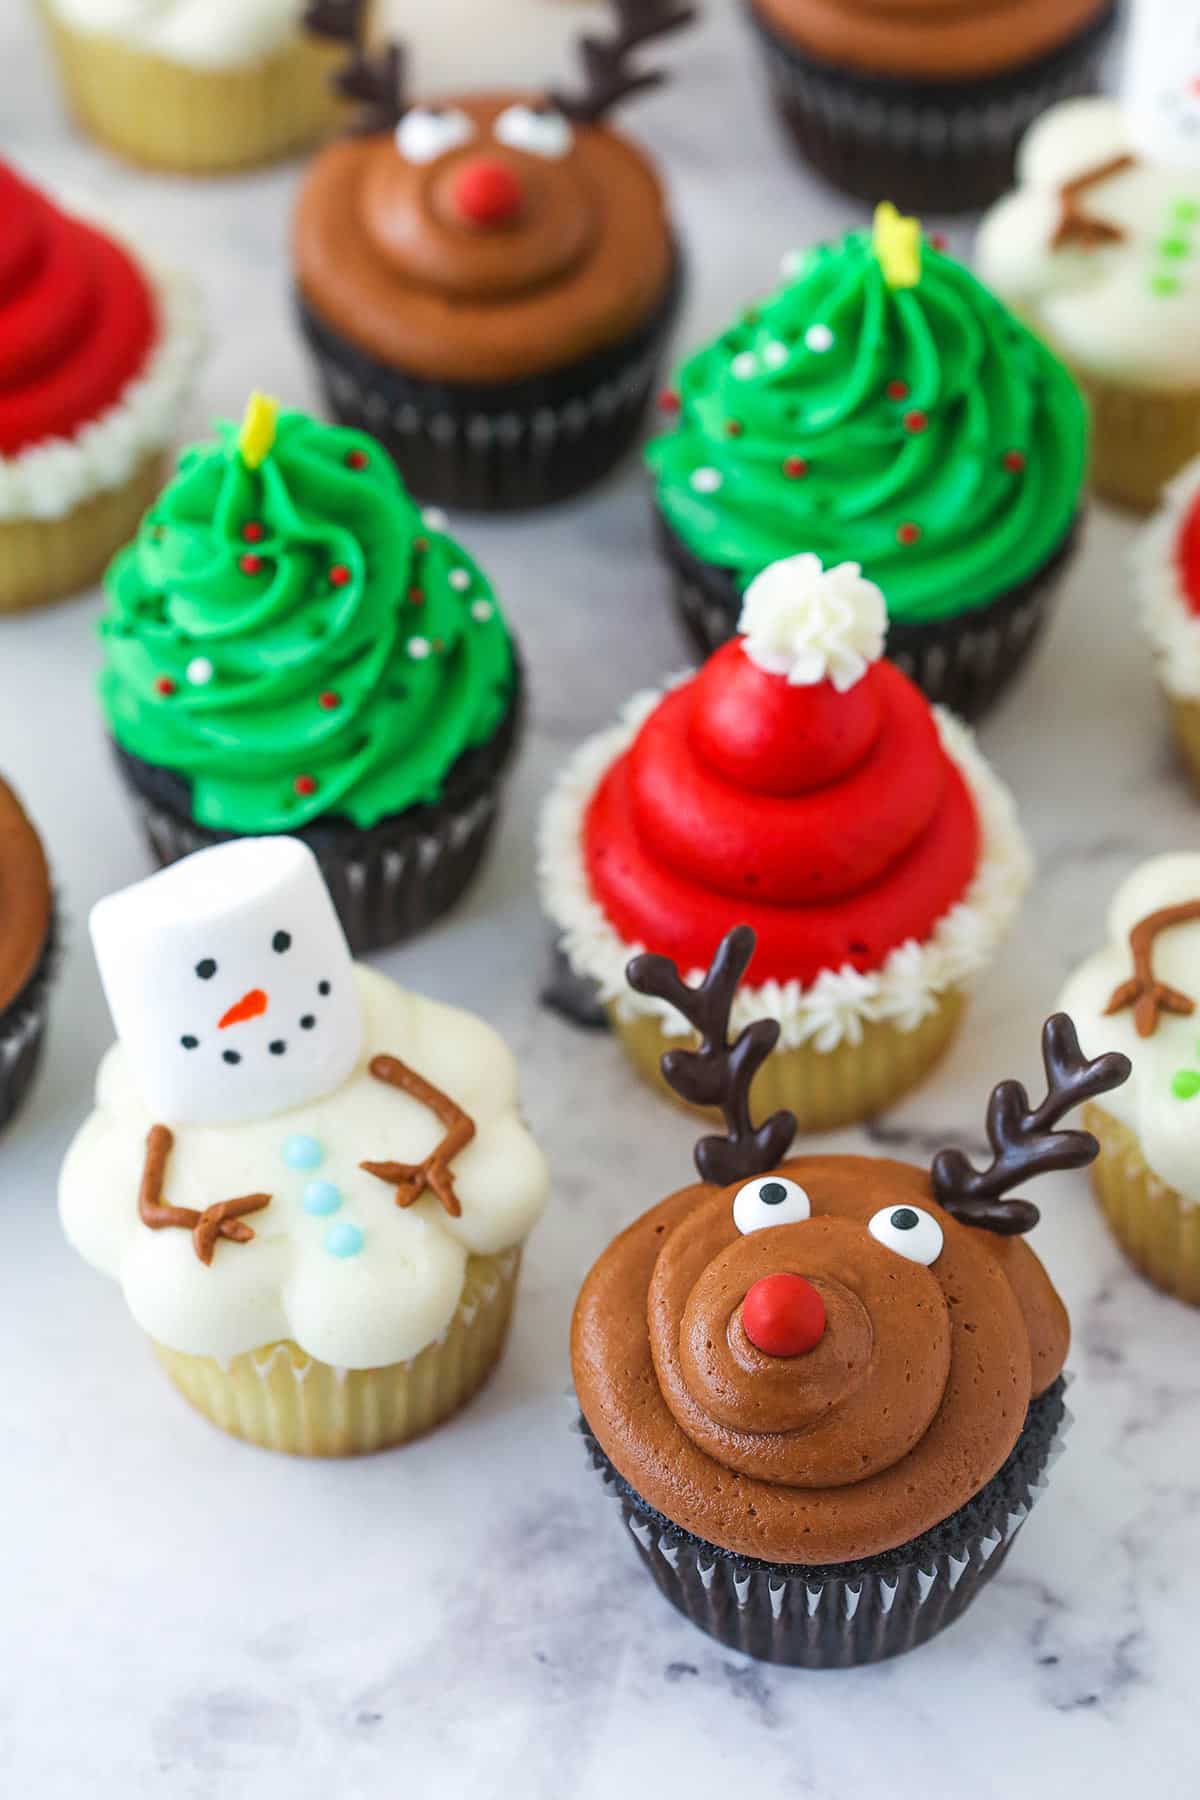 https://www.lifeloveandsugar.com/wp-content/uploads/2022/12/Decorated-Christmas-Cupcakes2.jpg